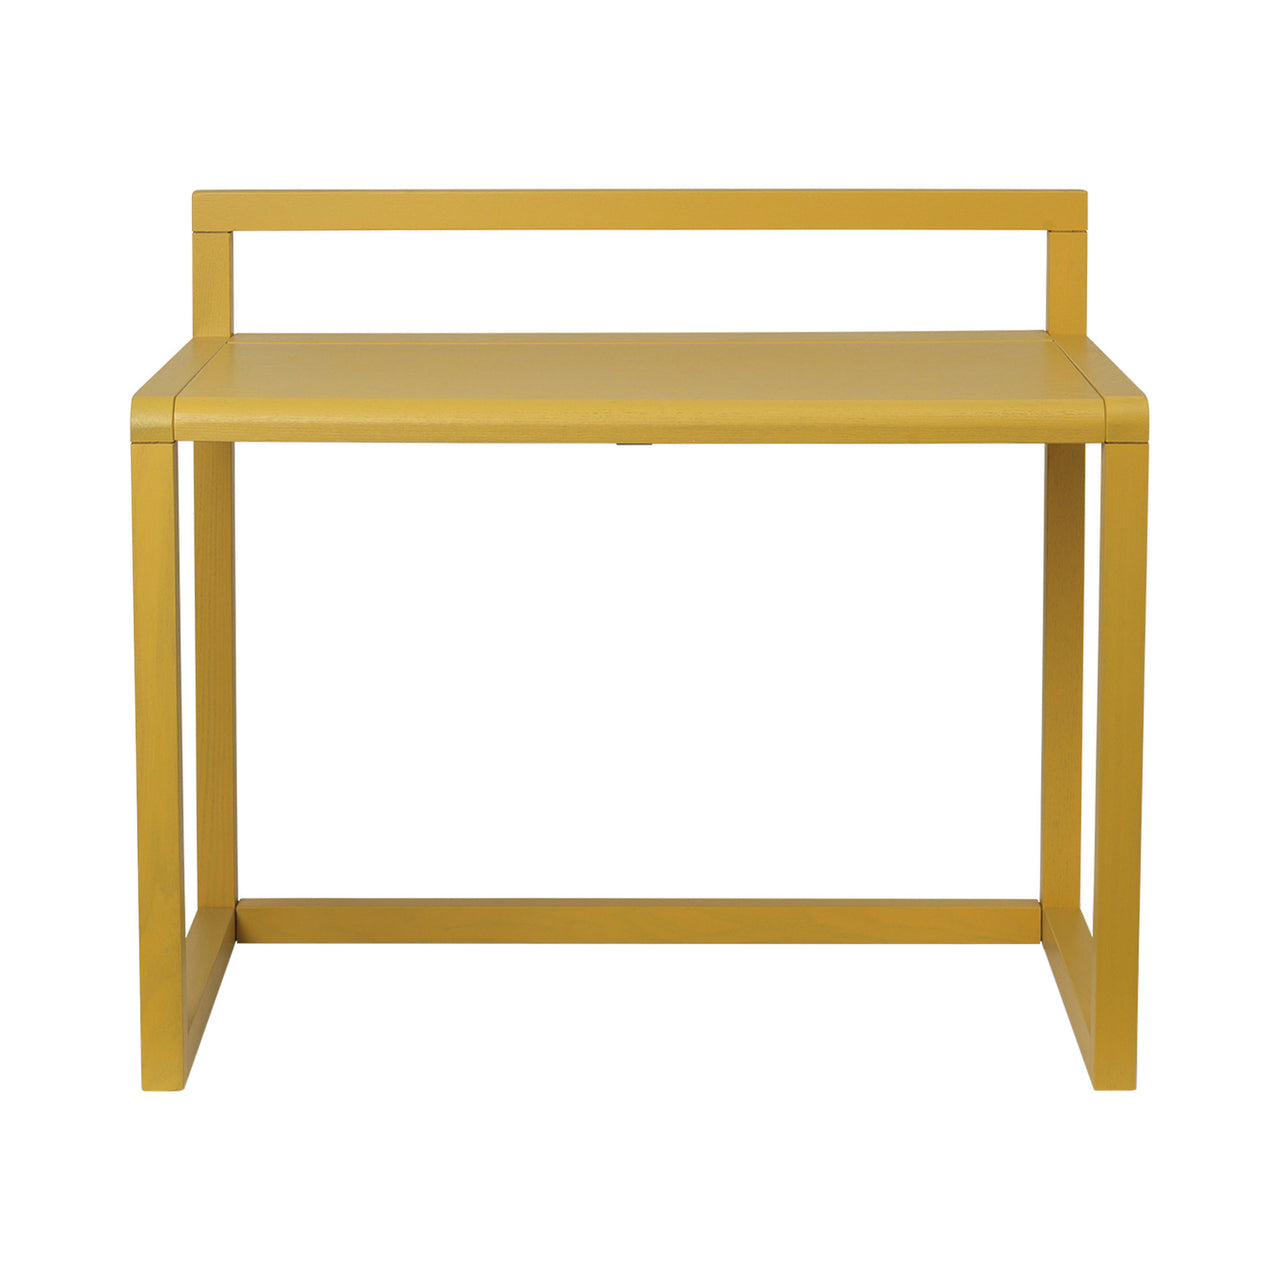 Little Architect Desk: Yellow